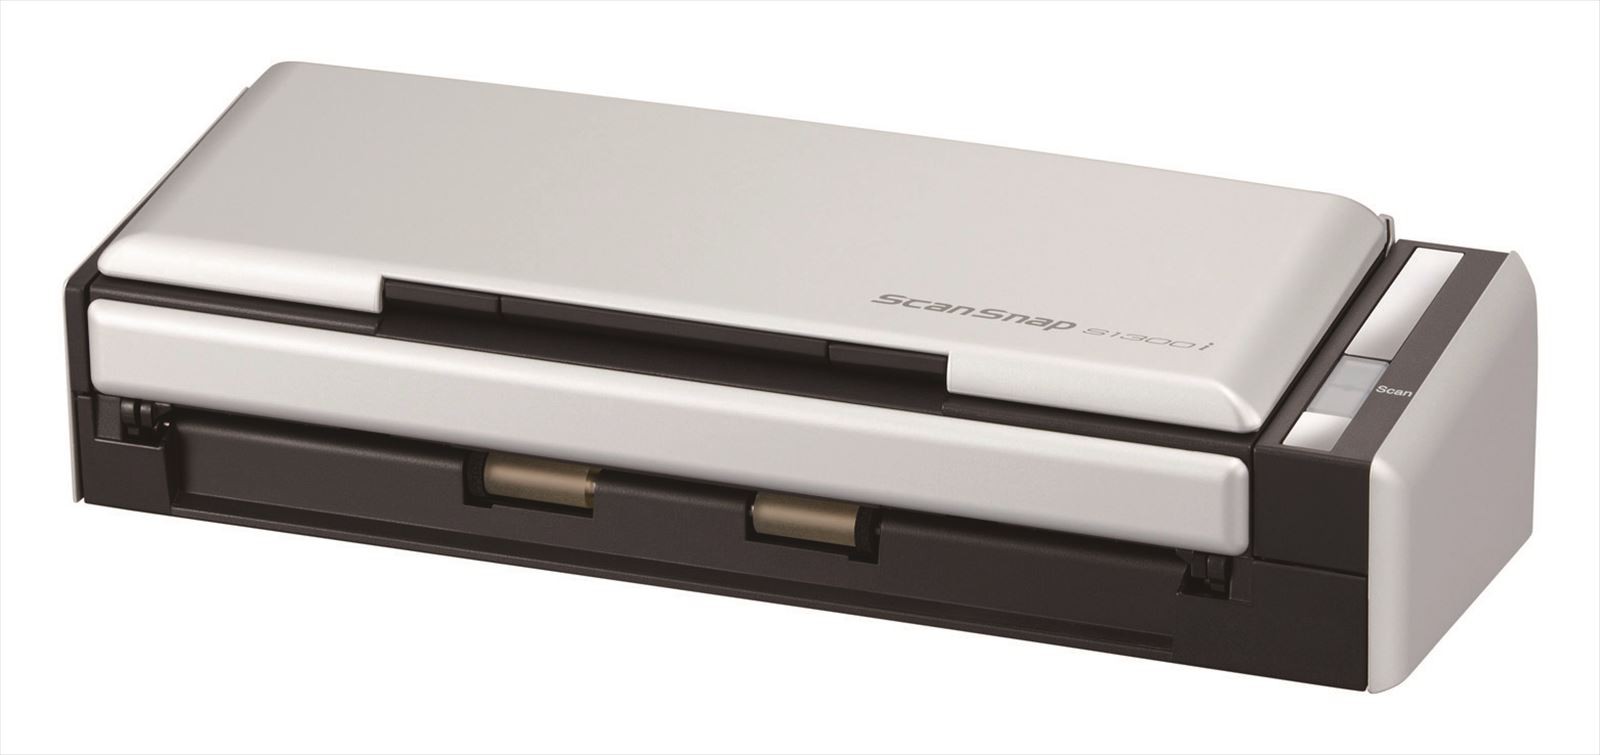 Fujitsu ScanSnap S1300i Scanner ADF 600 x 600 DPI A4 Nero, Argento